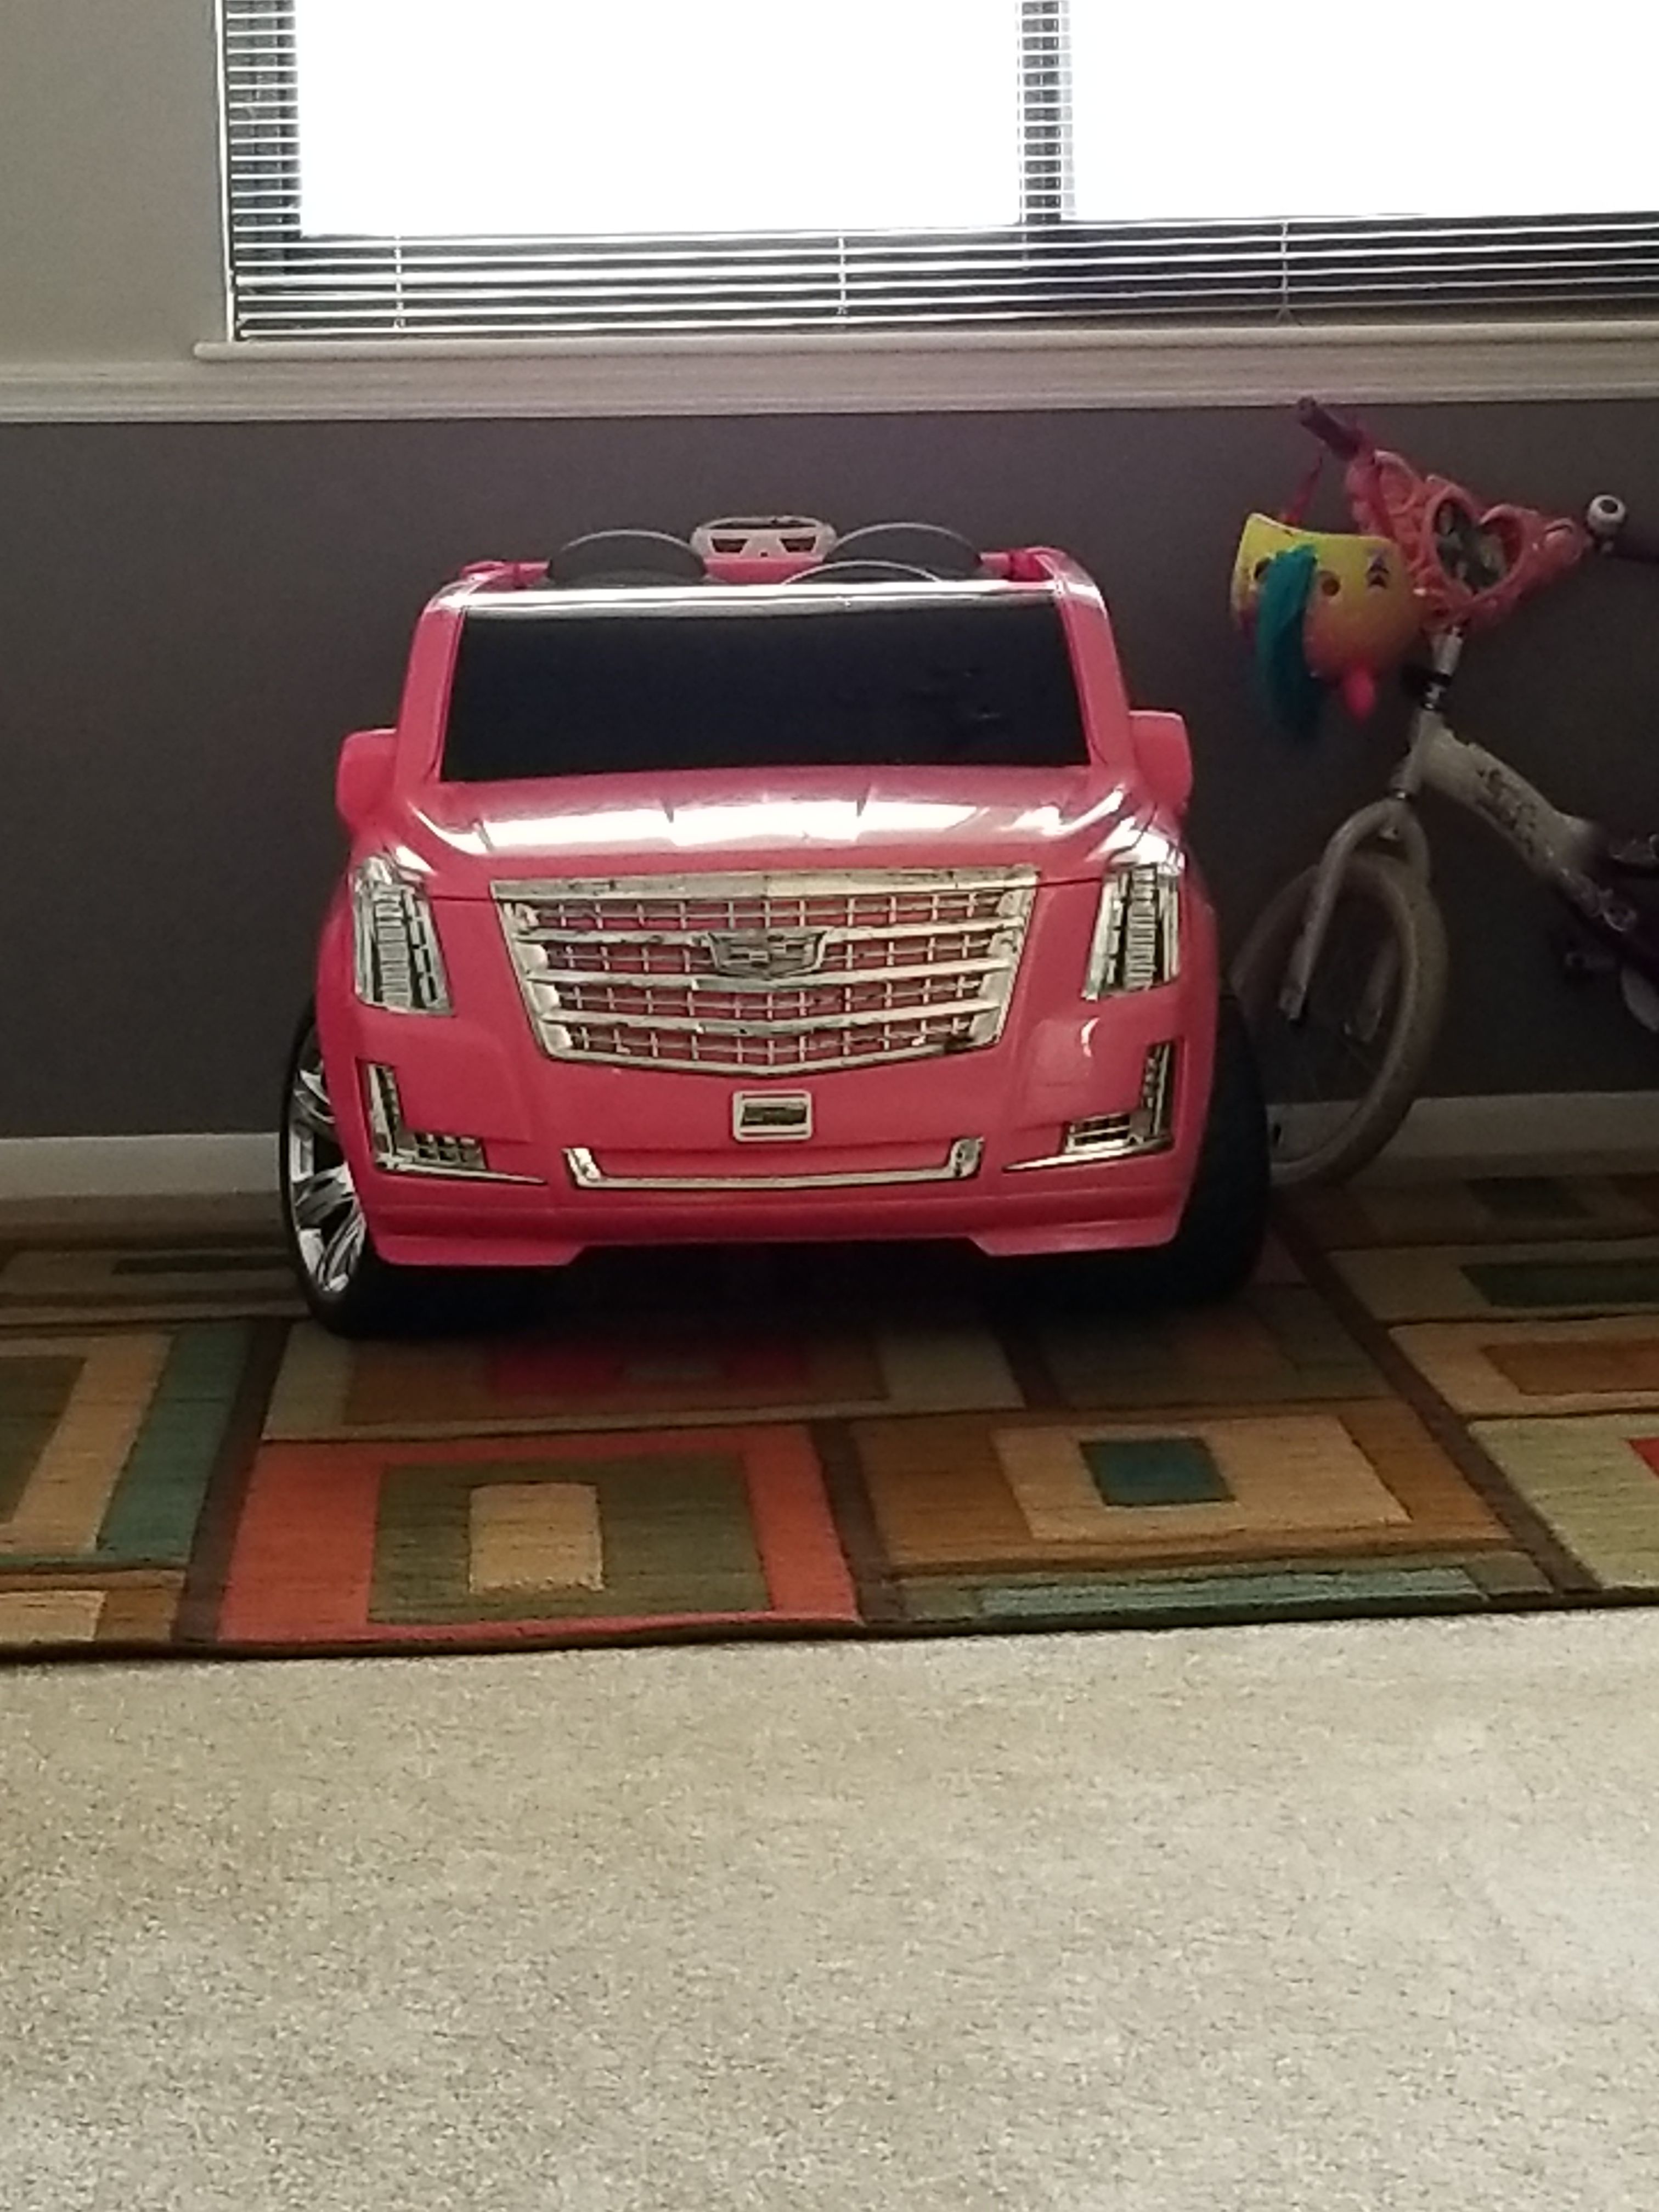 Pink Cadillac Barbie car